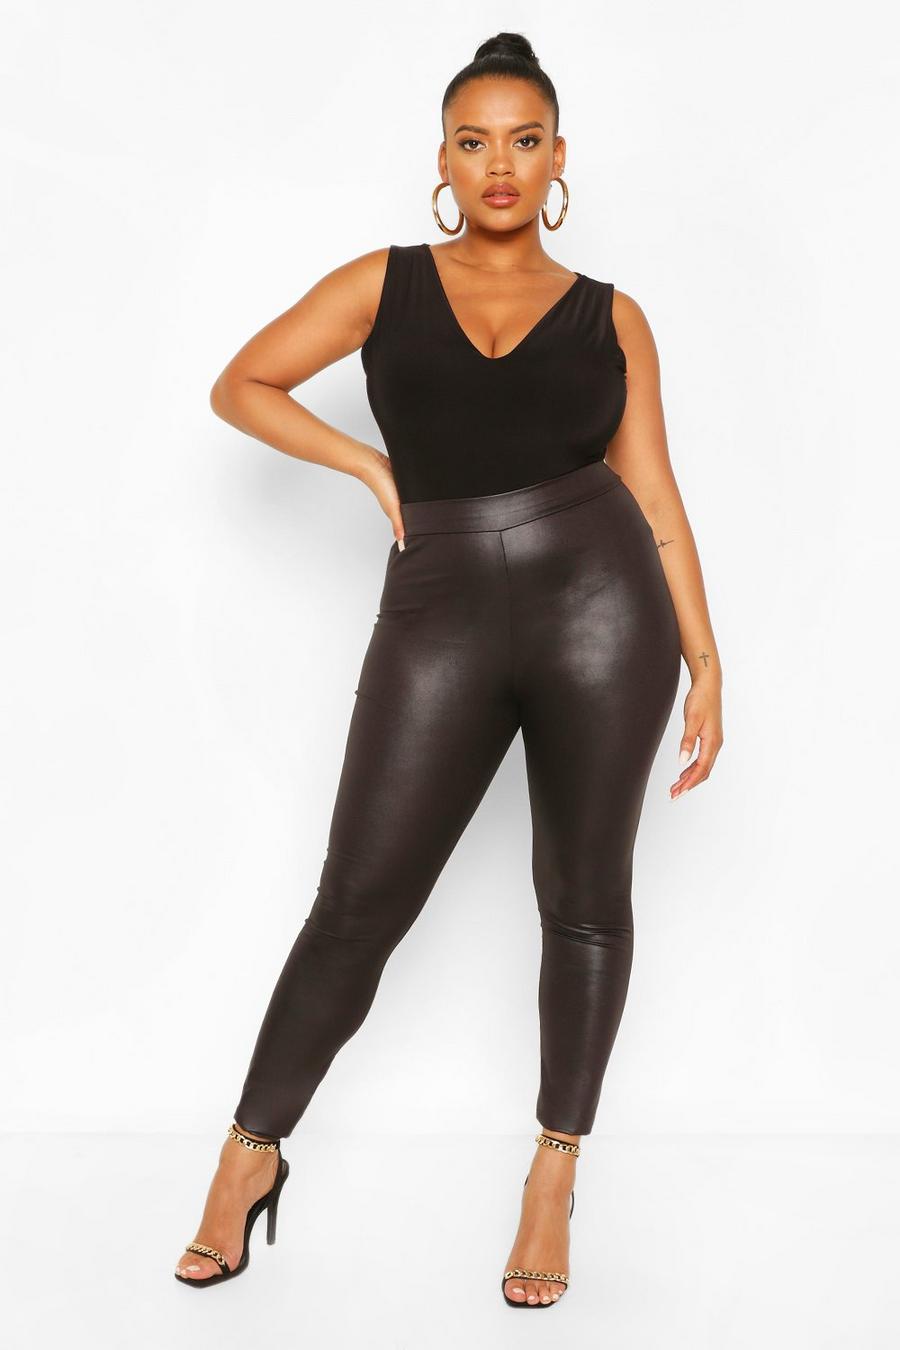 https://media.boohoo.com/i/boohoo/pzz99682_black_xl/female-black-plus--high-waist-wet-look-legging/?w=900&qlt=default&fmt.jp2.qlt=70&fmt=auto&sm=fit